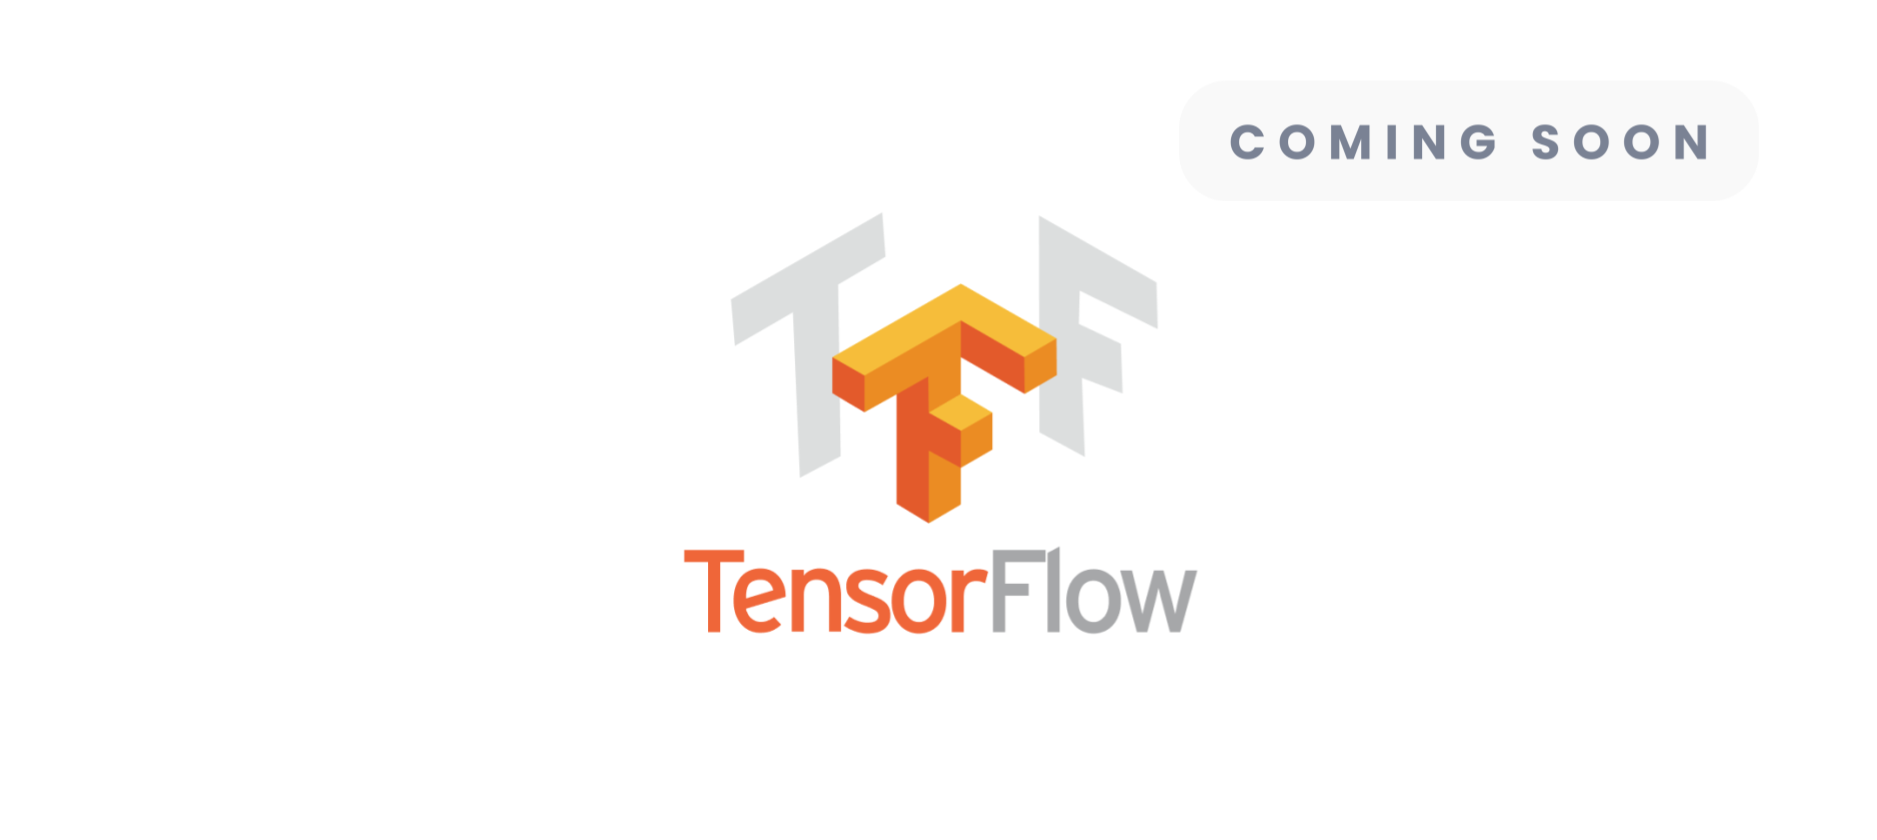 Machine Learning - TensorFlow - Coming soon